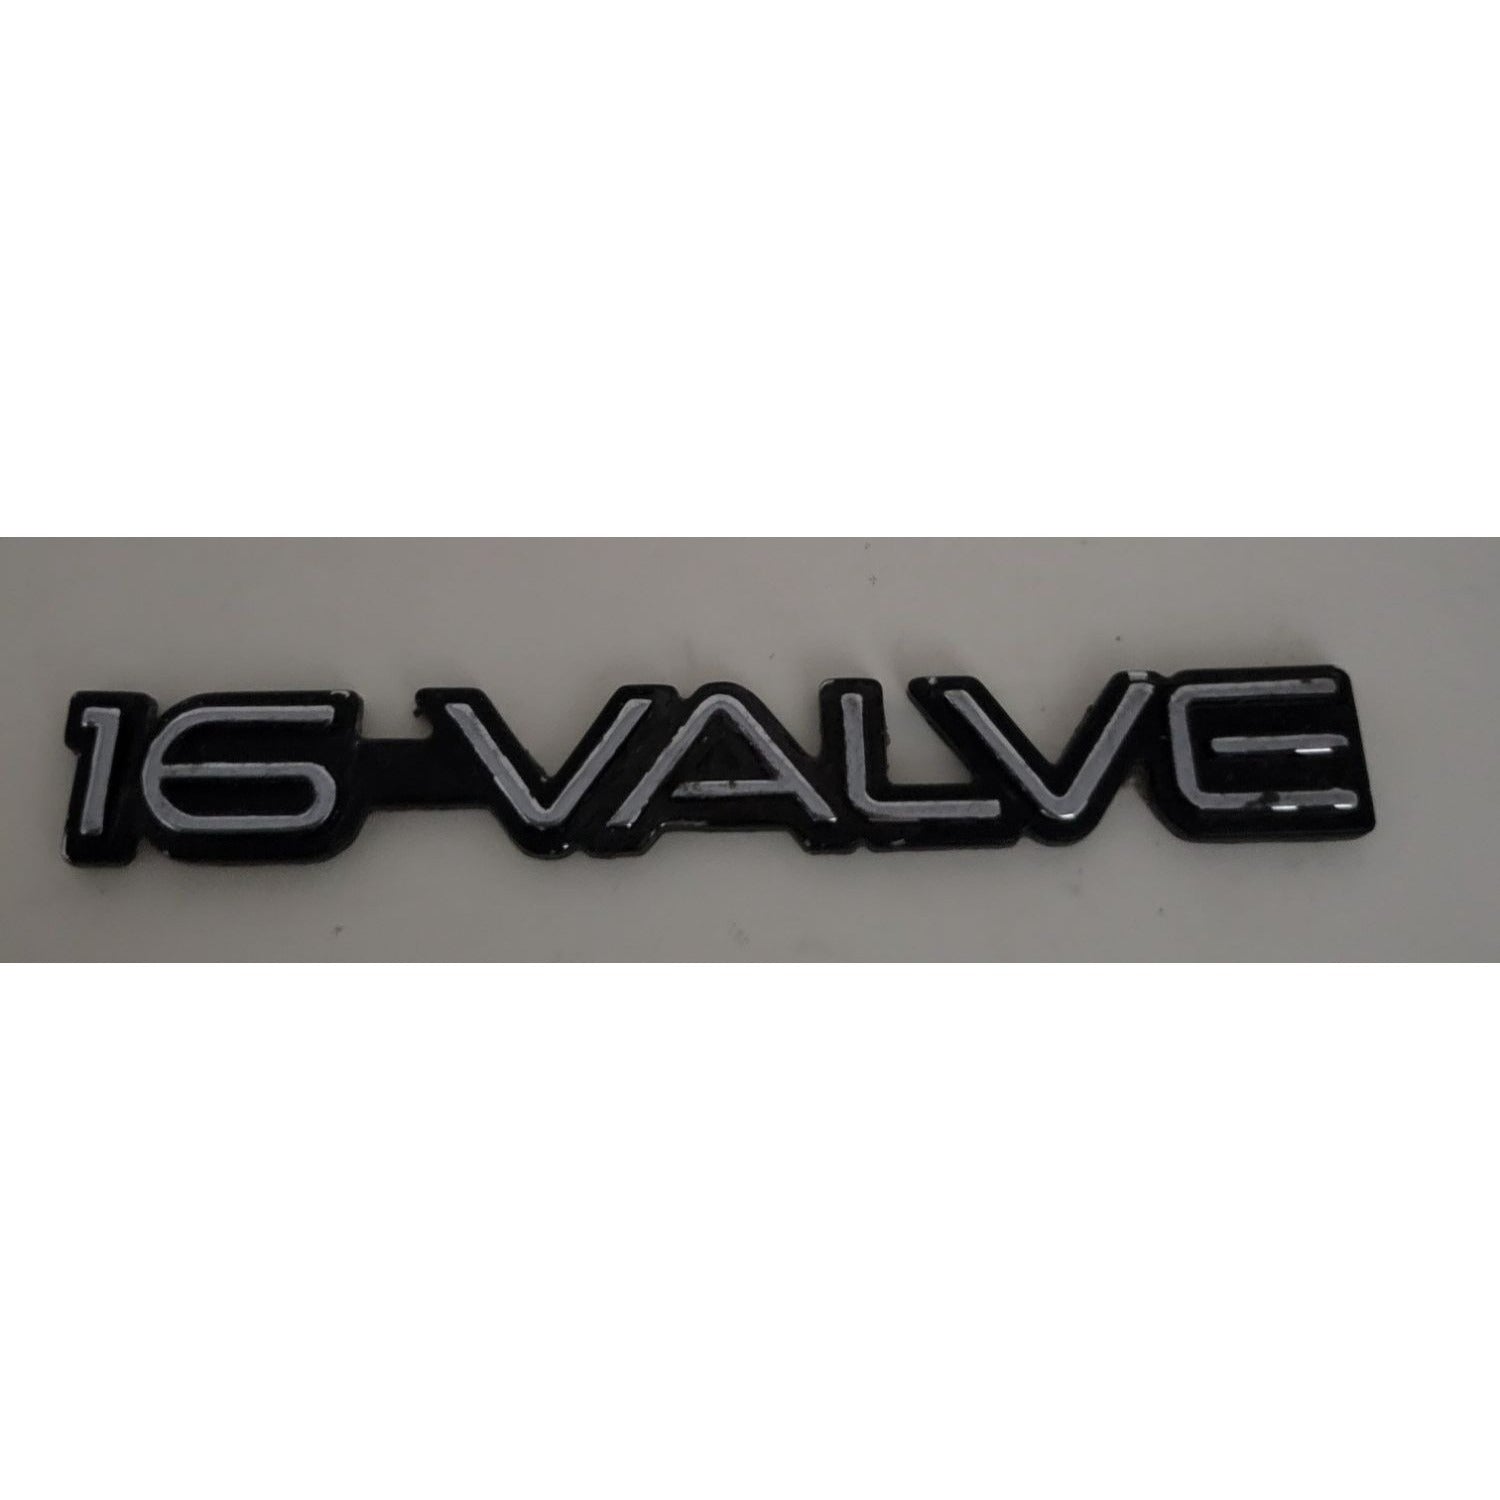 16 VALVE Silver/Black Auto Patch/Emblem